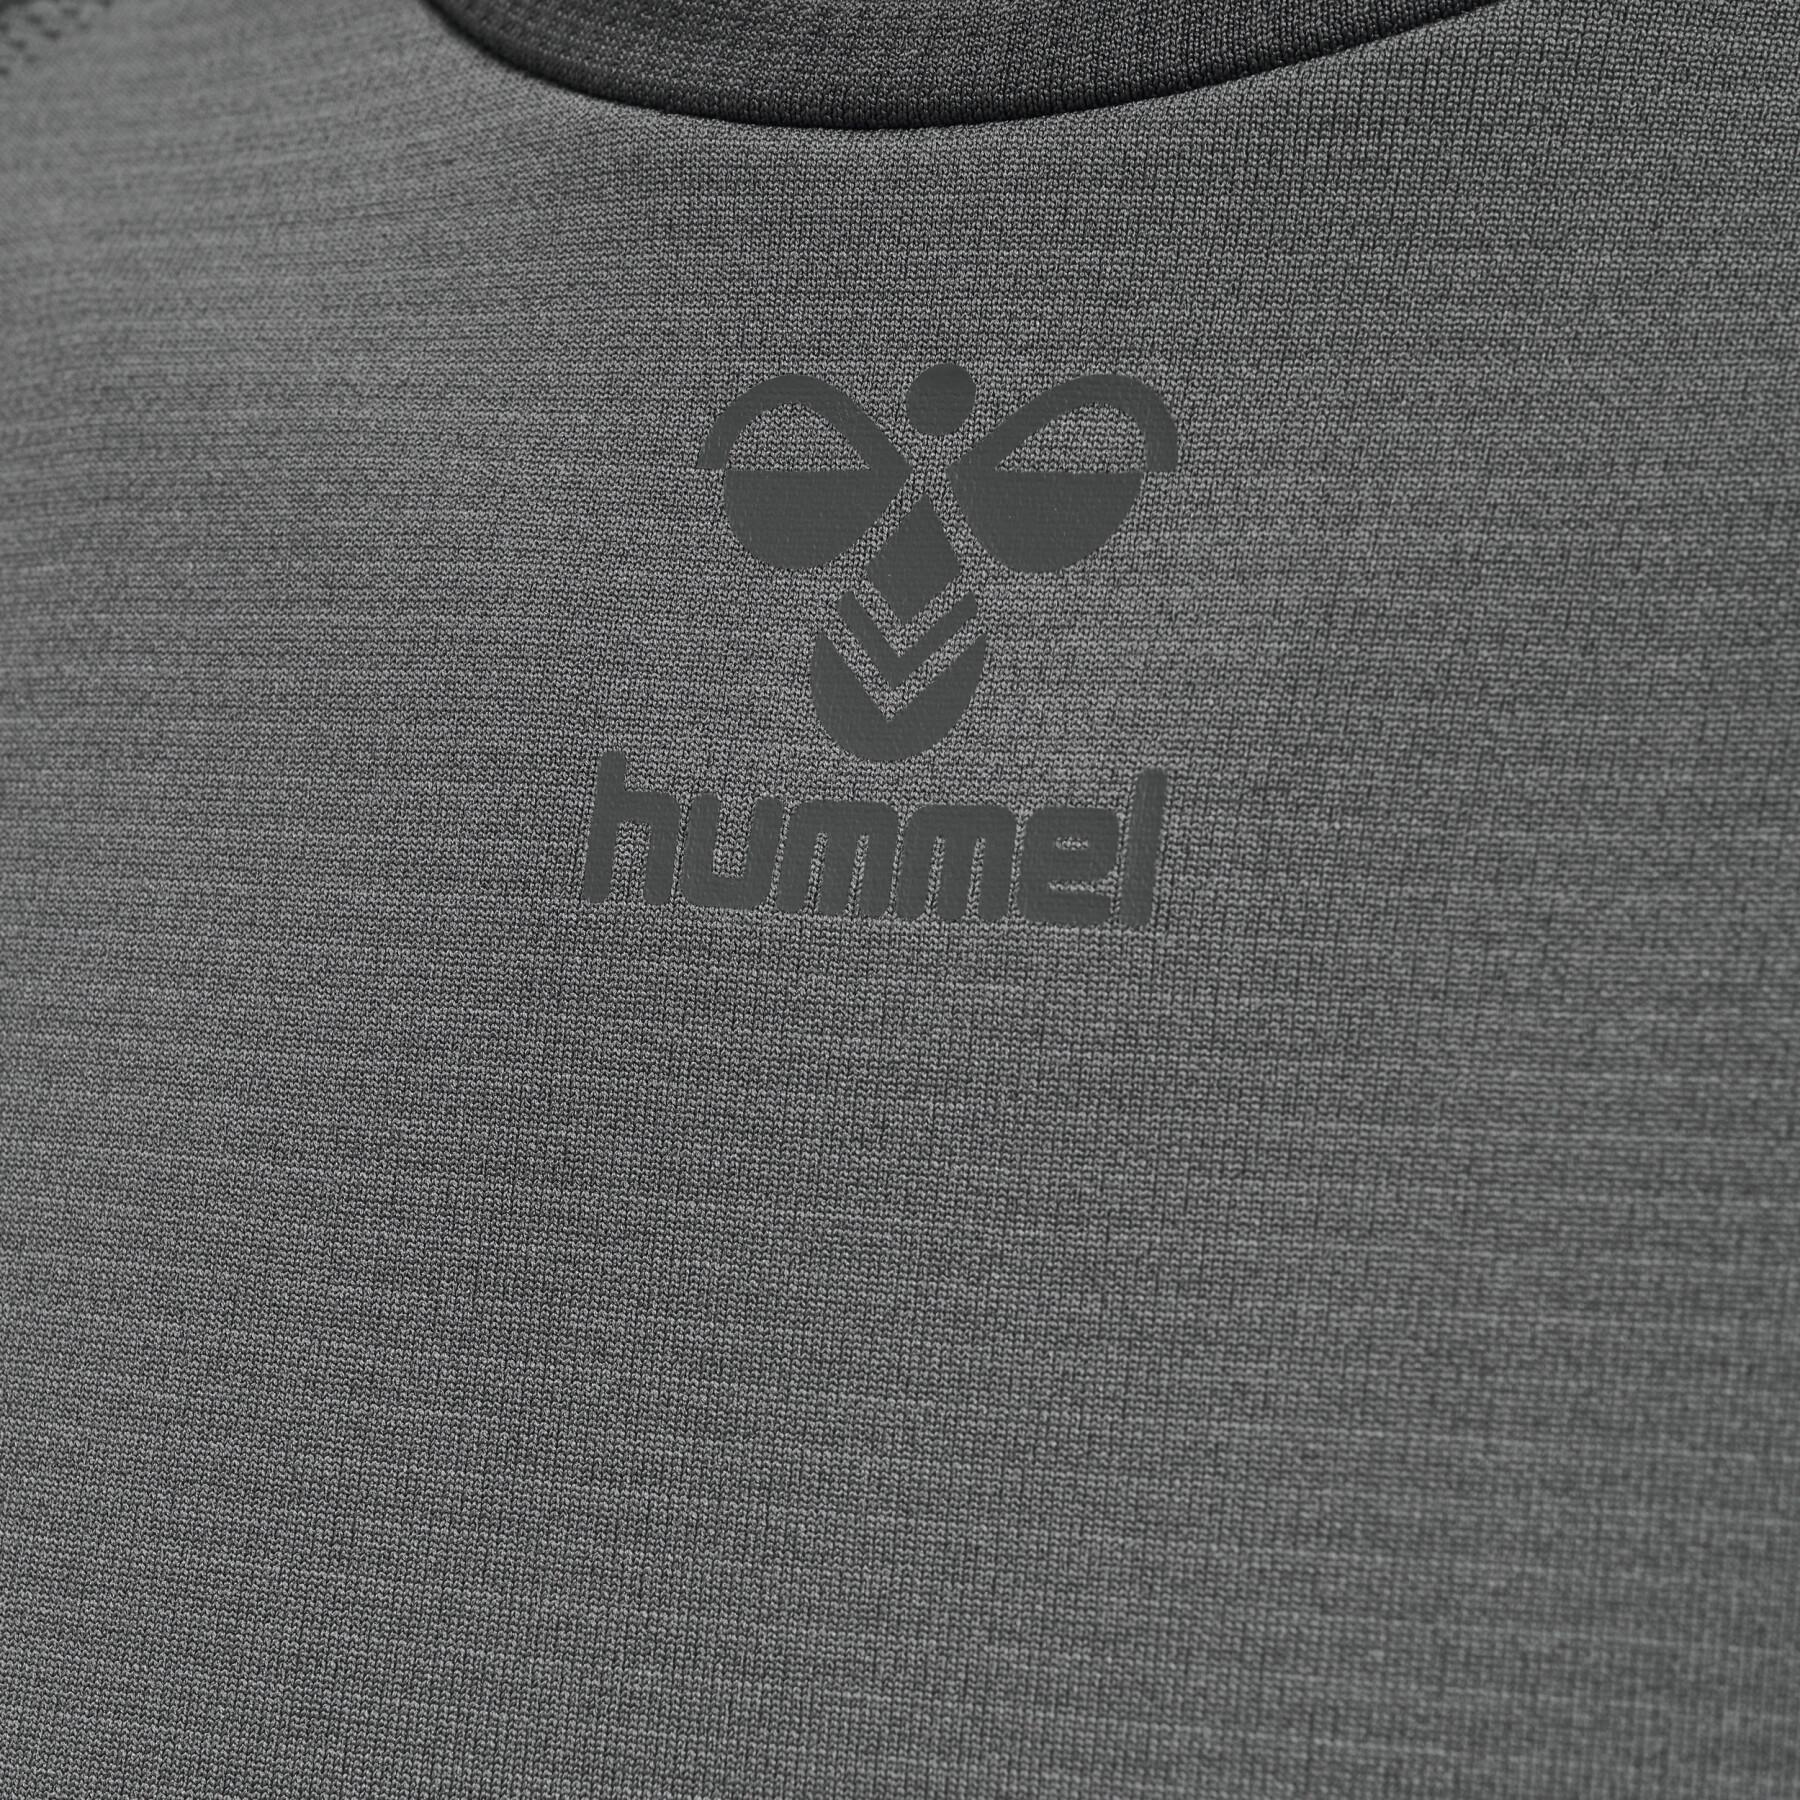 T-shirt Hummel Pro Grid